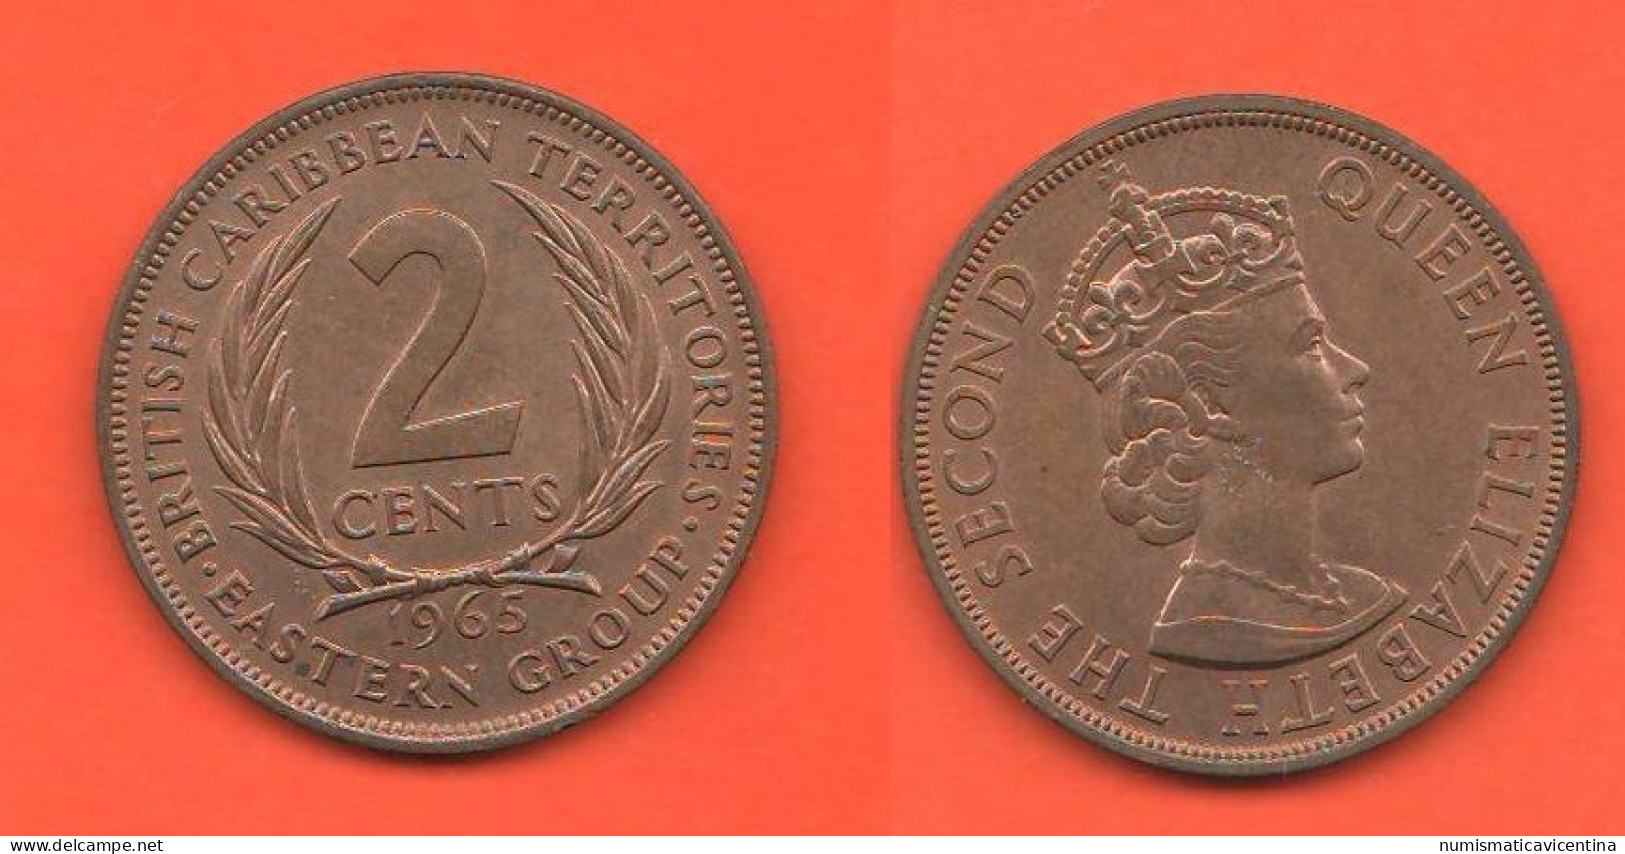 Caraibi 2 Cents 1965 Carribean States Bronze Coin Britanniques D'outre-mer C 7 - British Caribbean Territories